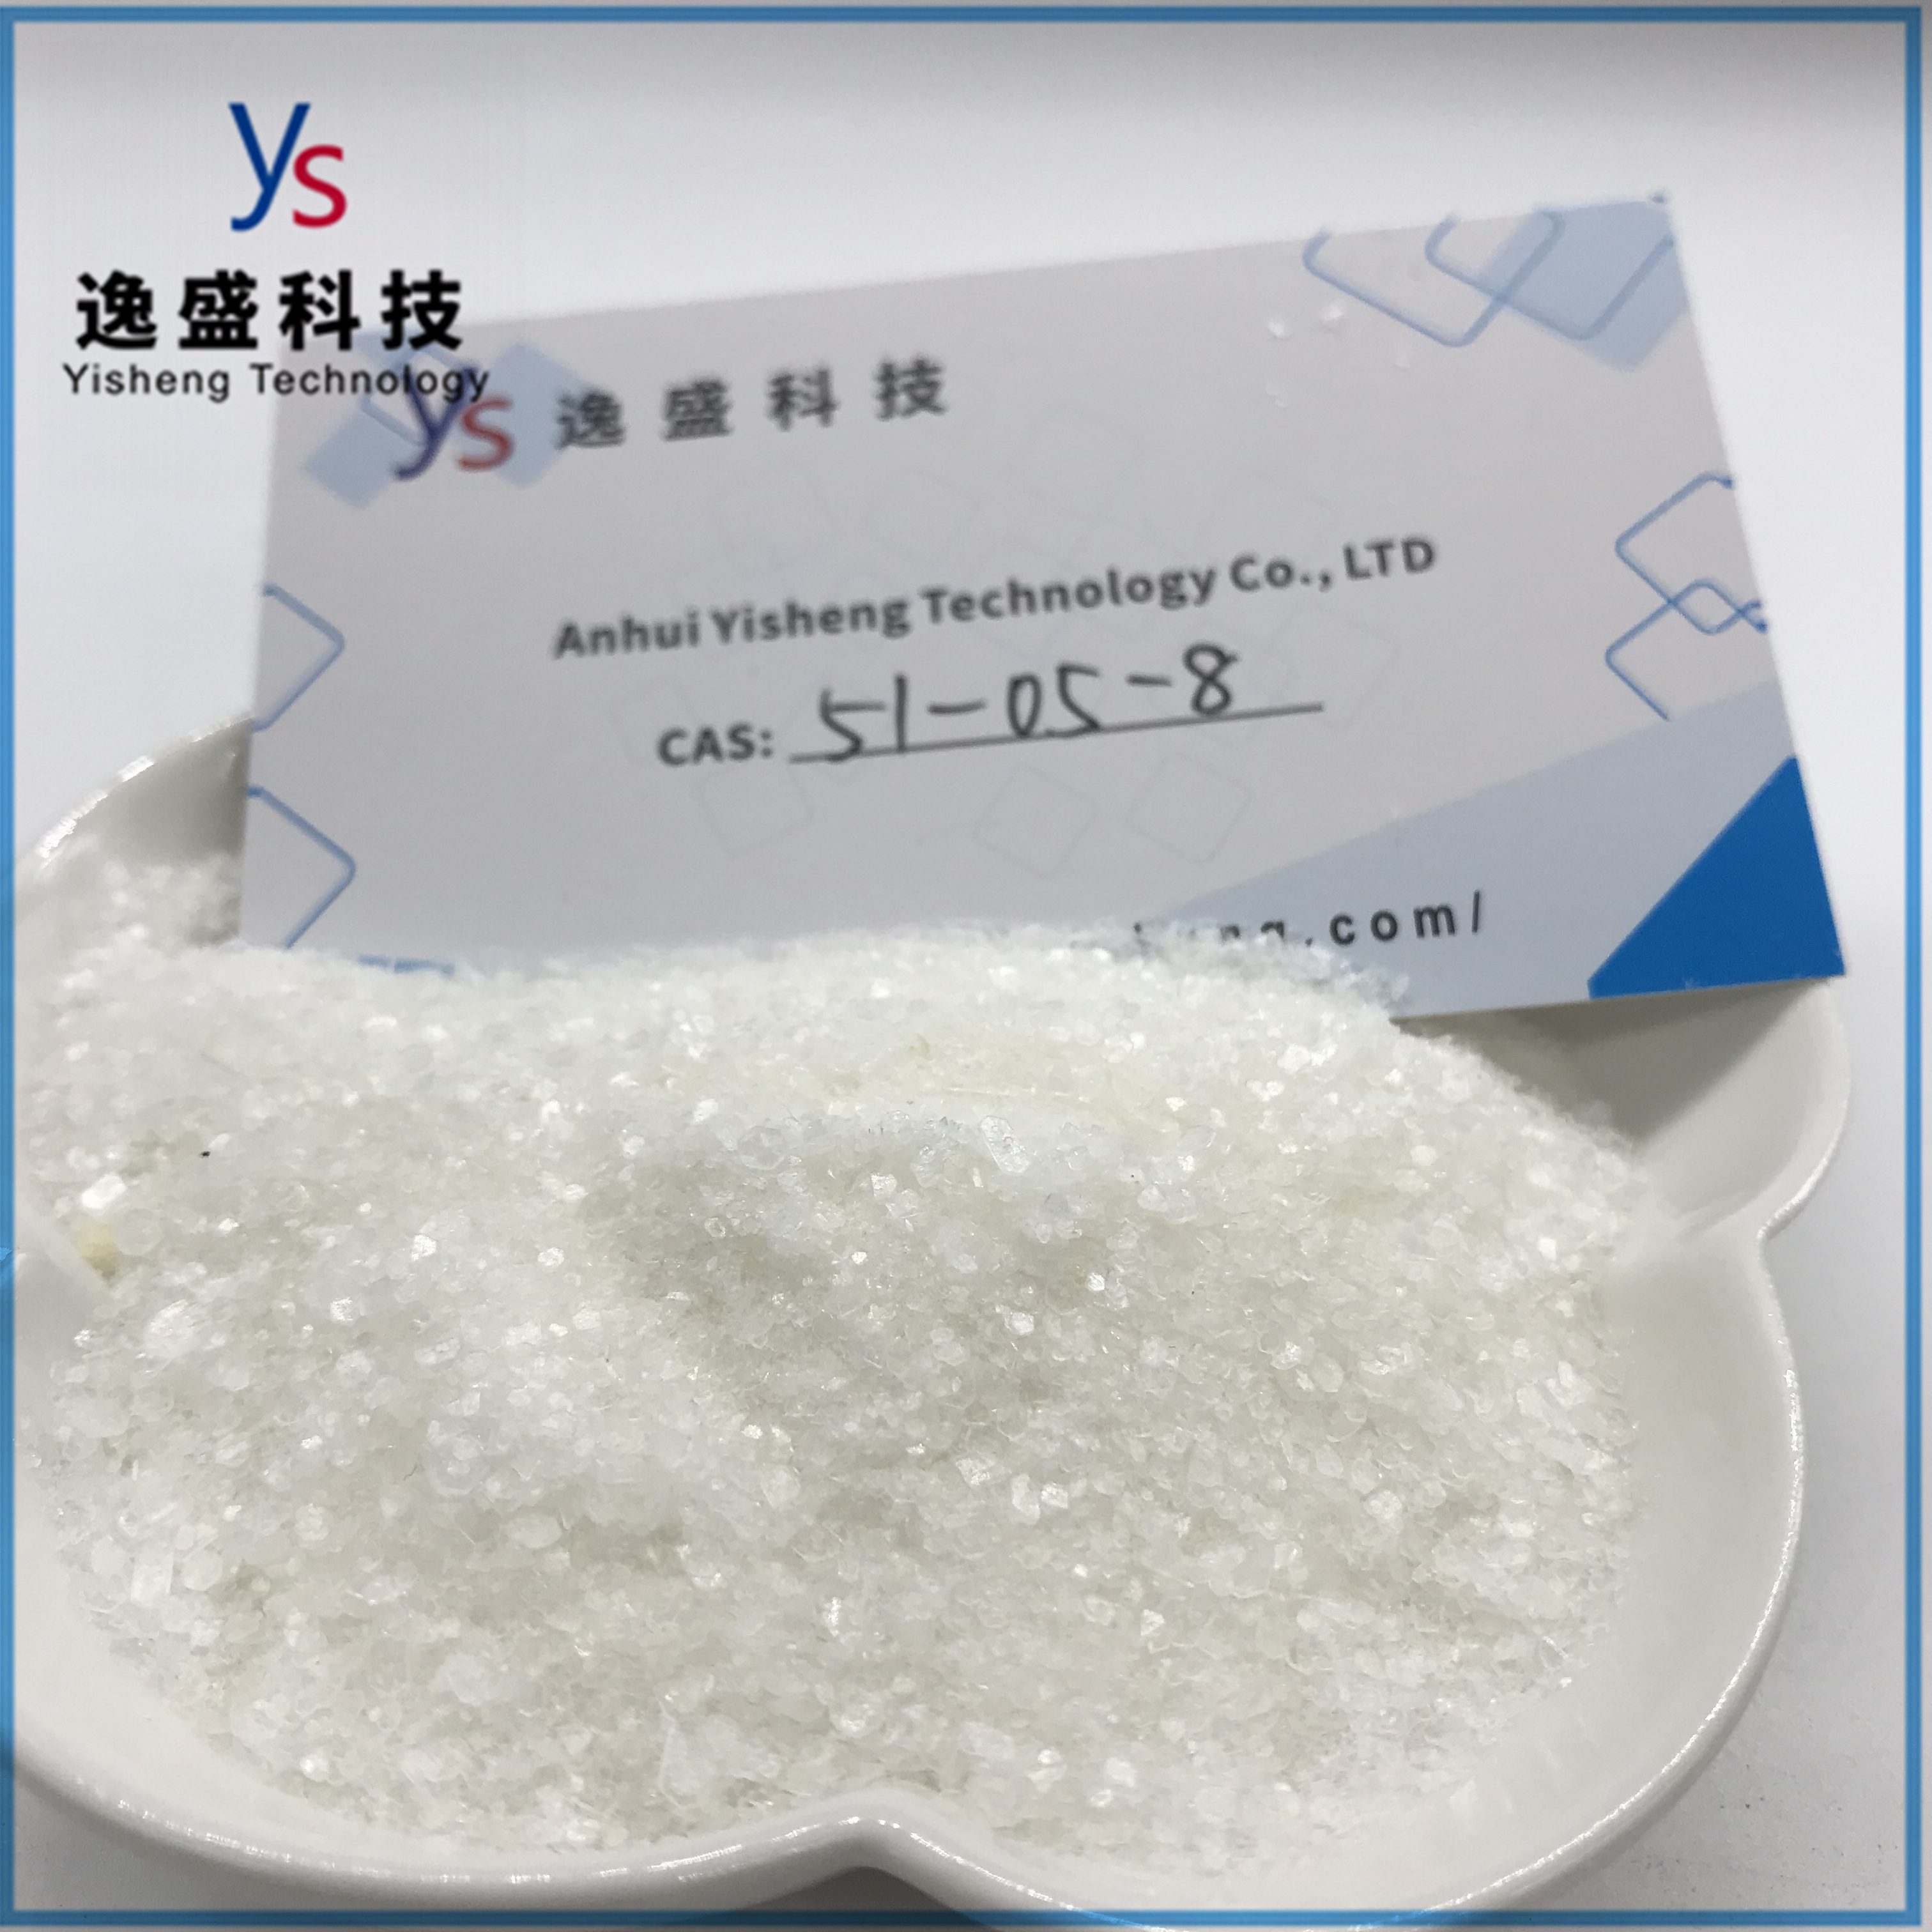 CAS 51-05-8 Procaine-hydrochloride met snelle levering 